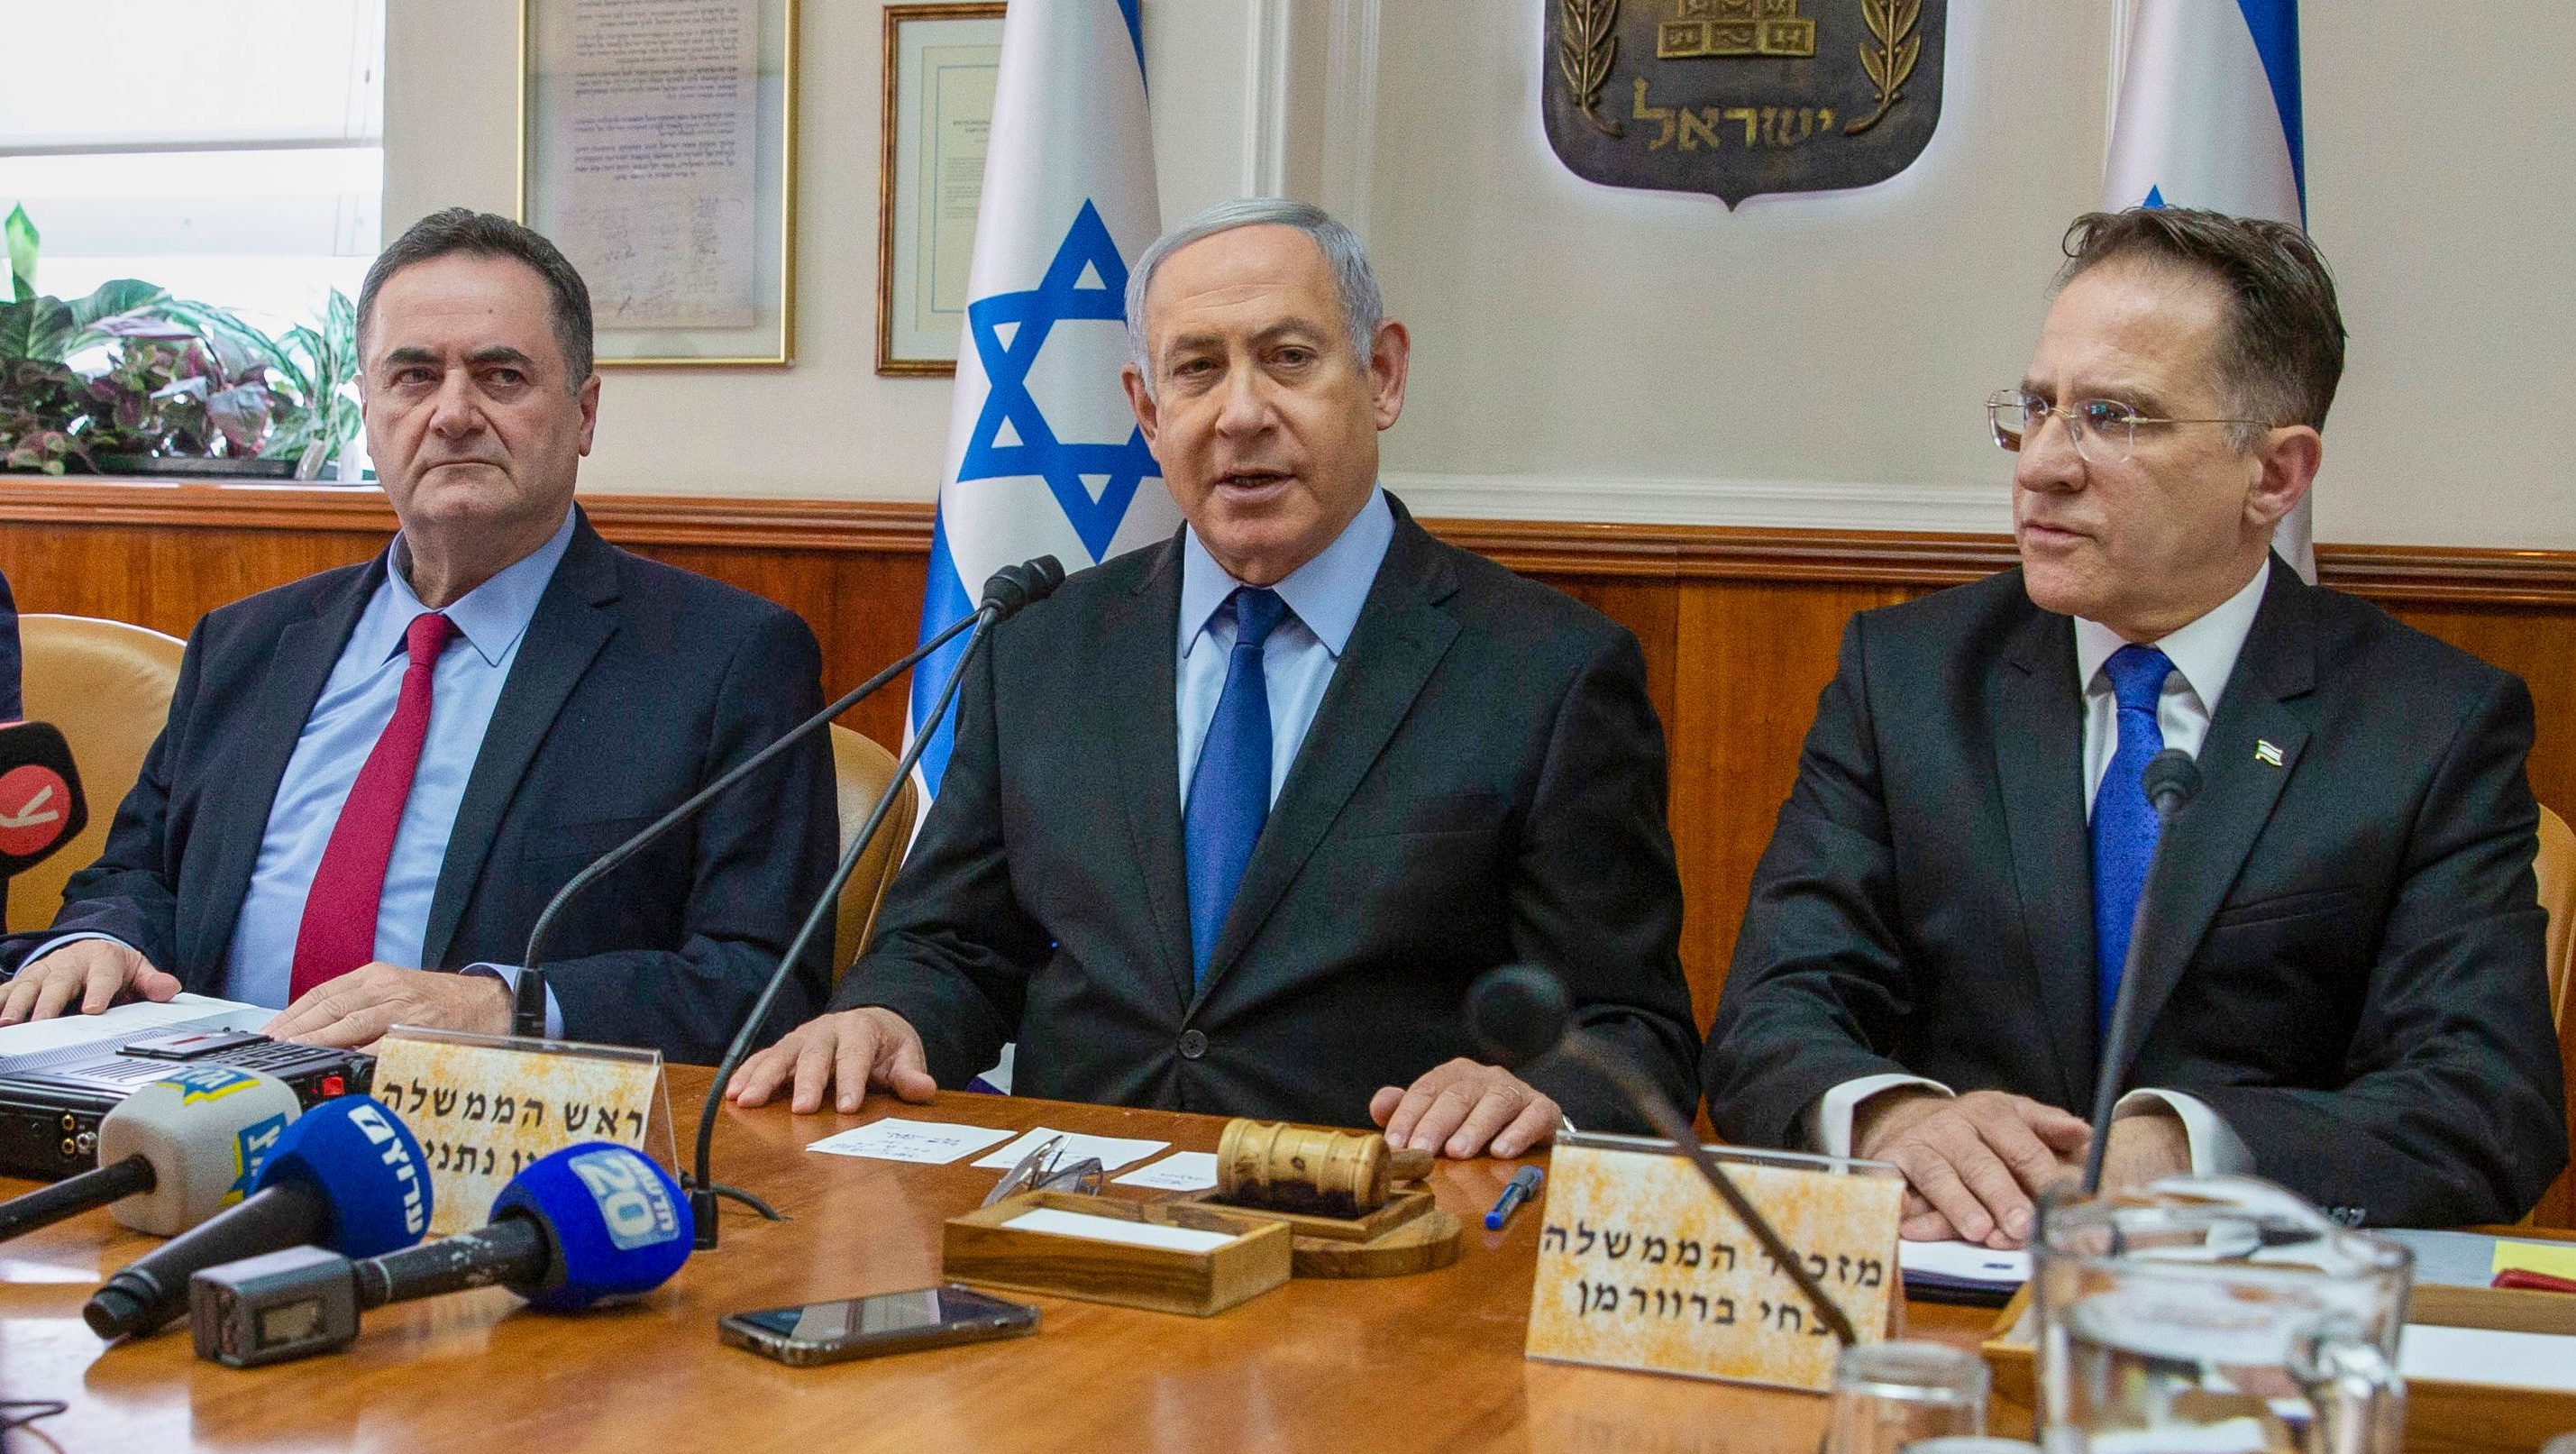 PM Netanyahu Slams Court Case to Determine his Political Future